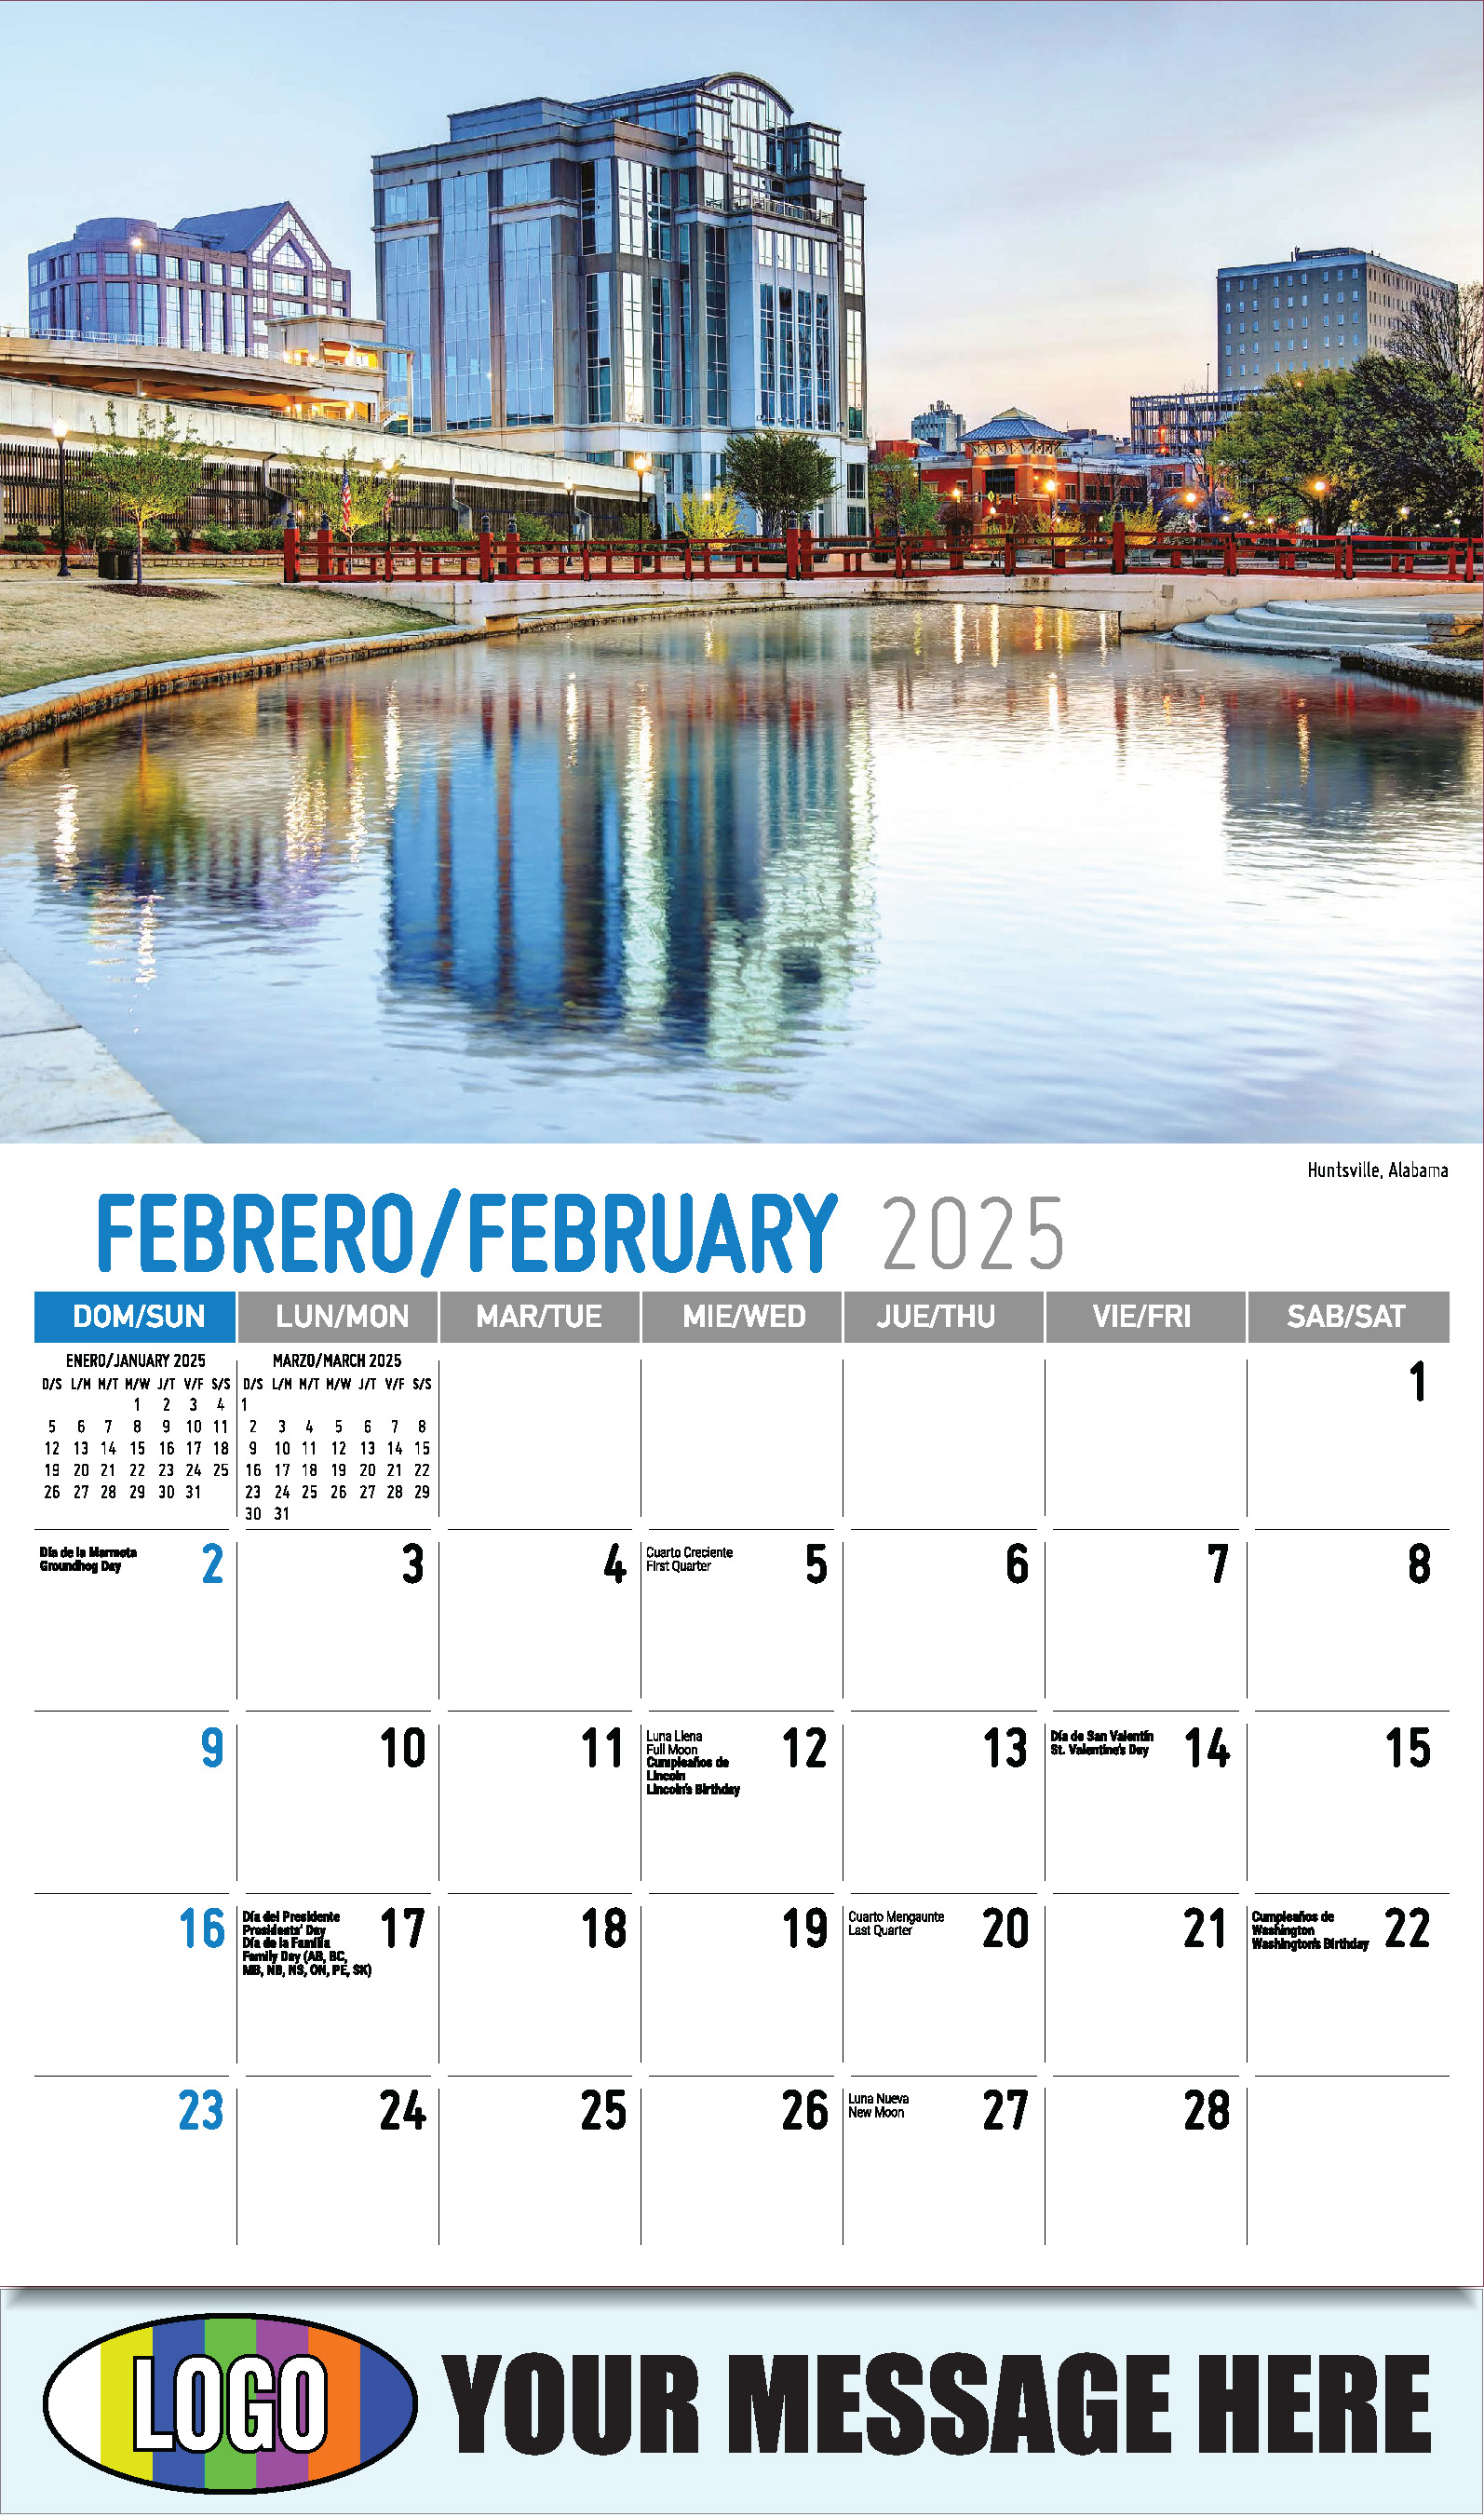 Scenes of America 2025 Bilingual Business Promo Calendar - February